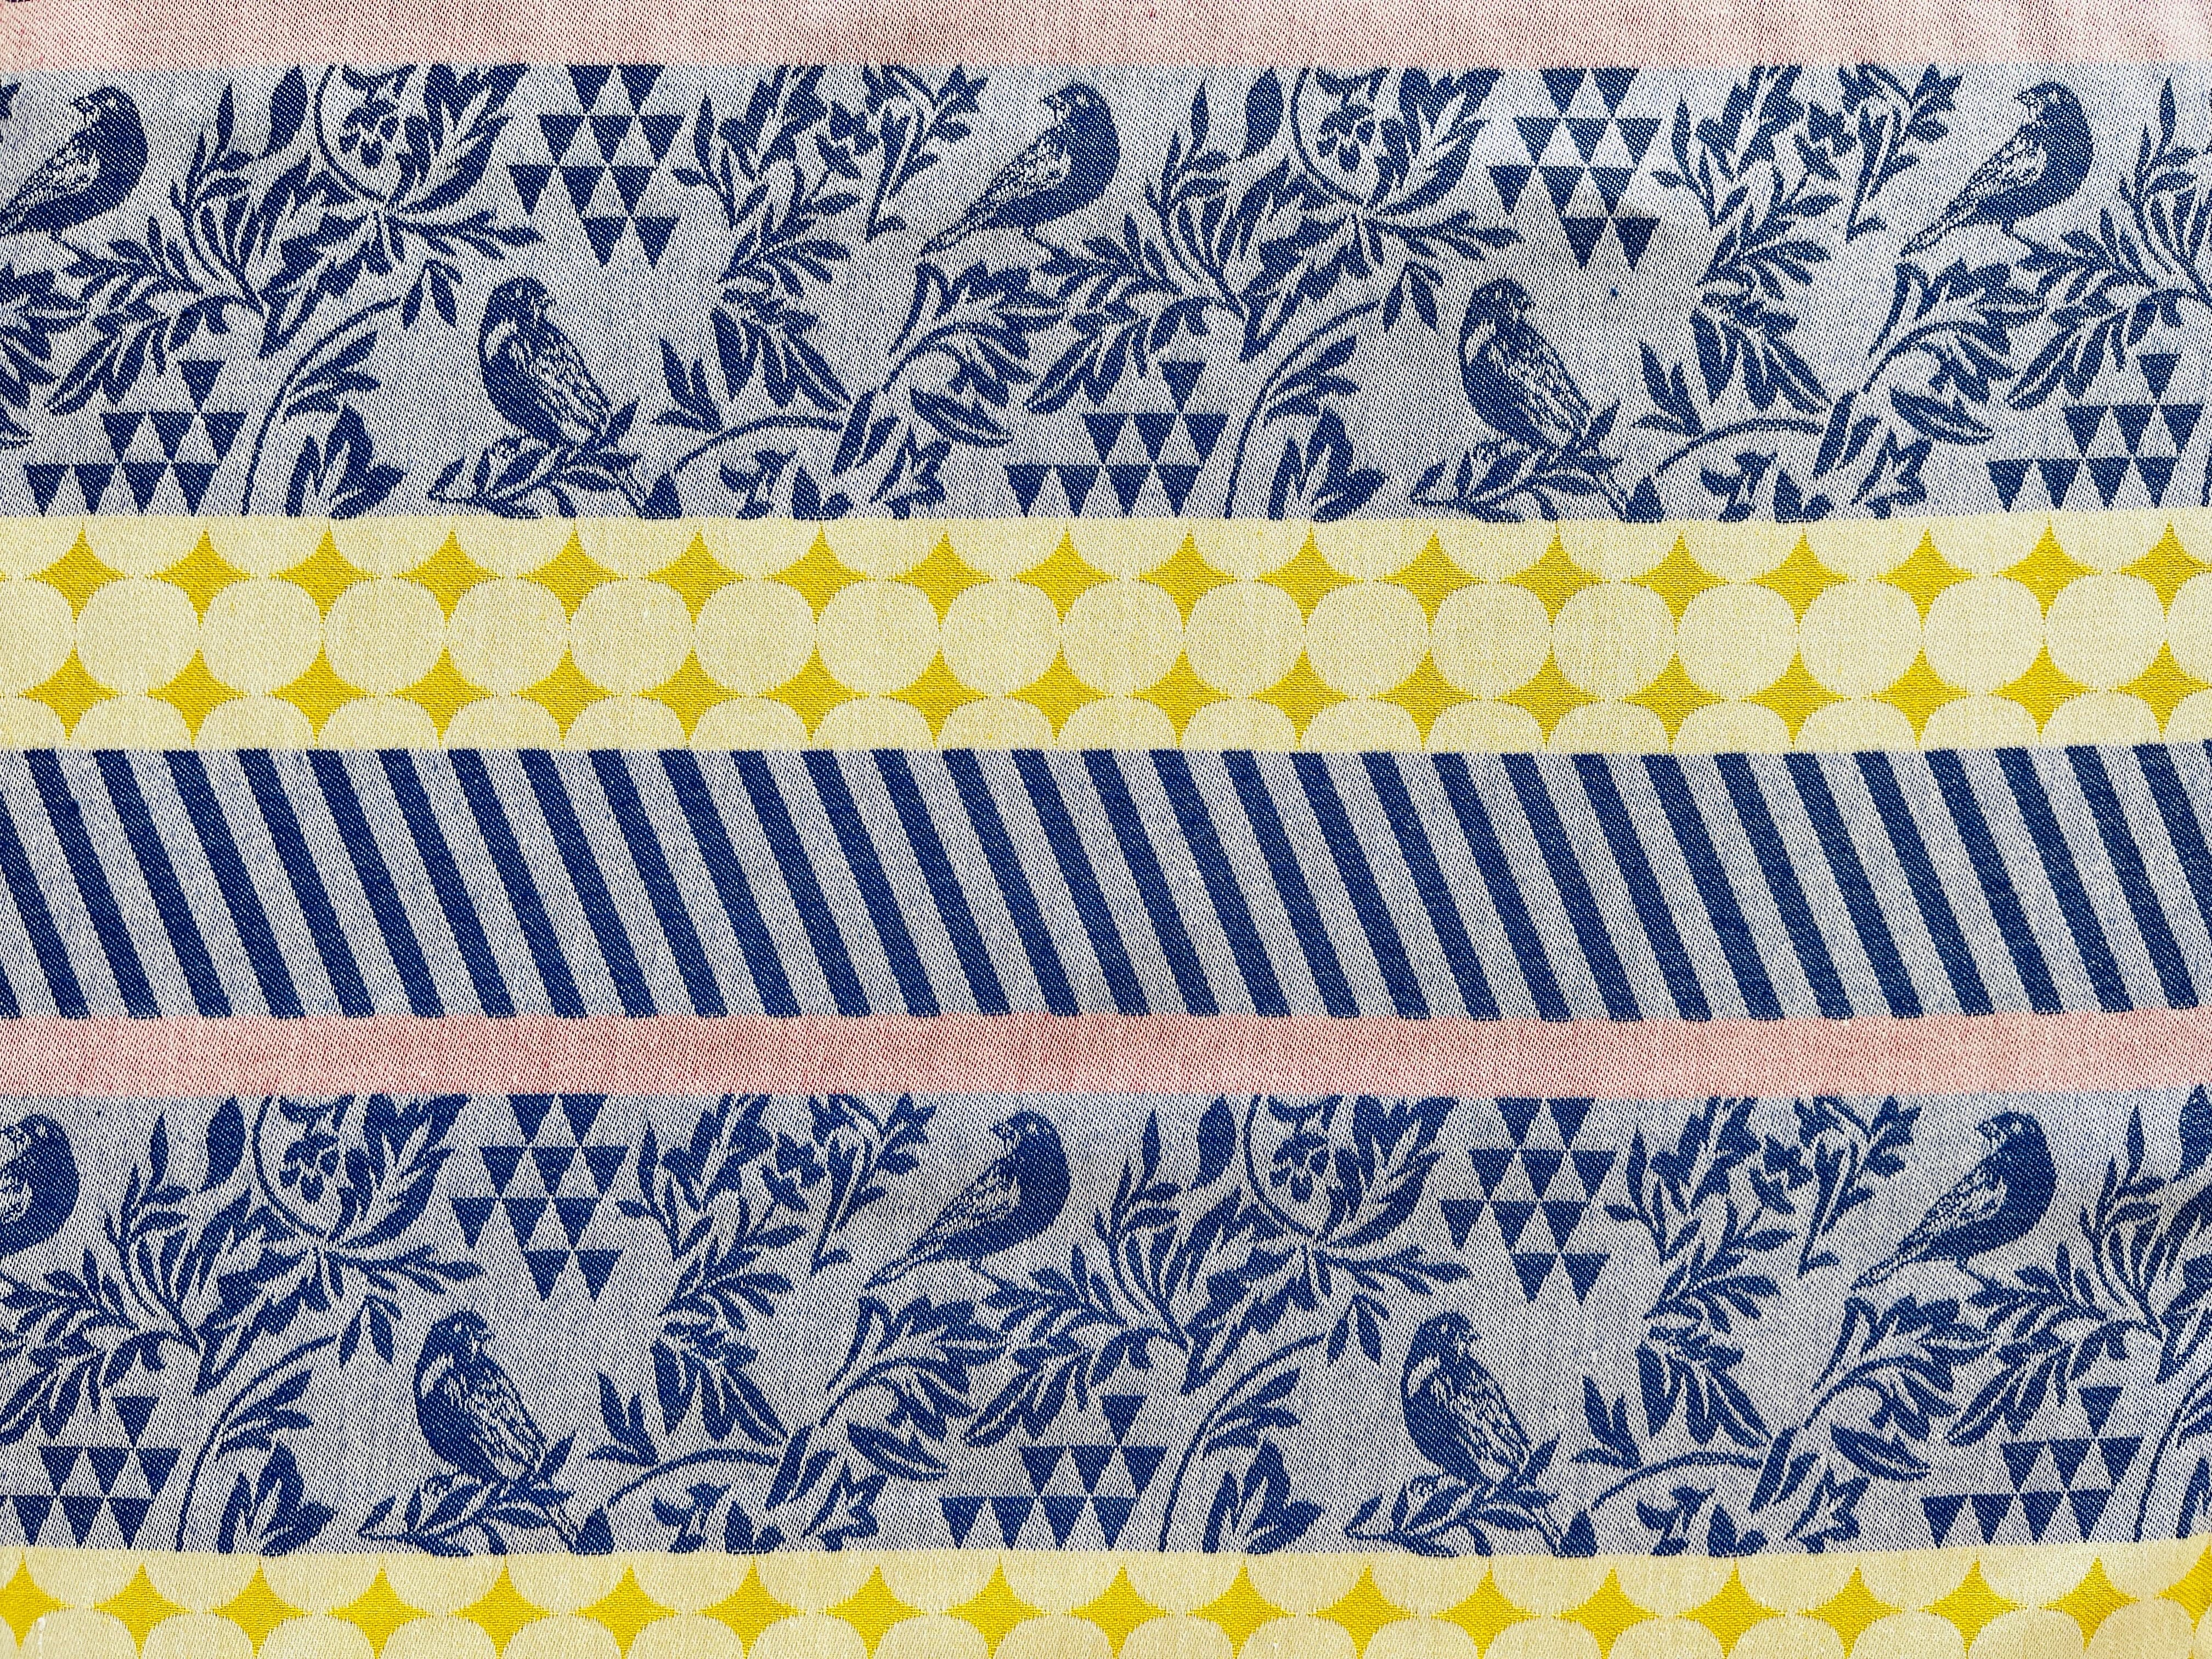 Bird - Bird Fabric -  Kokka - Japanese Fabric - Jacquard Cotton -Reversible